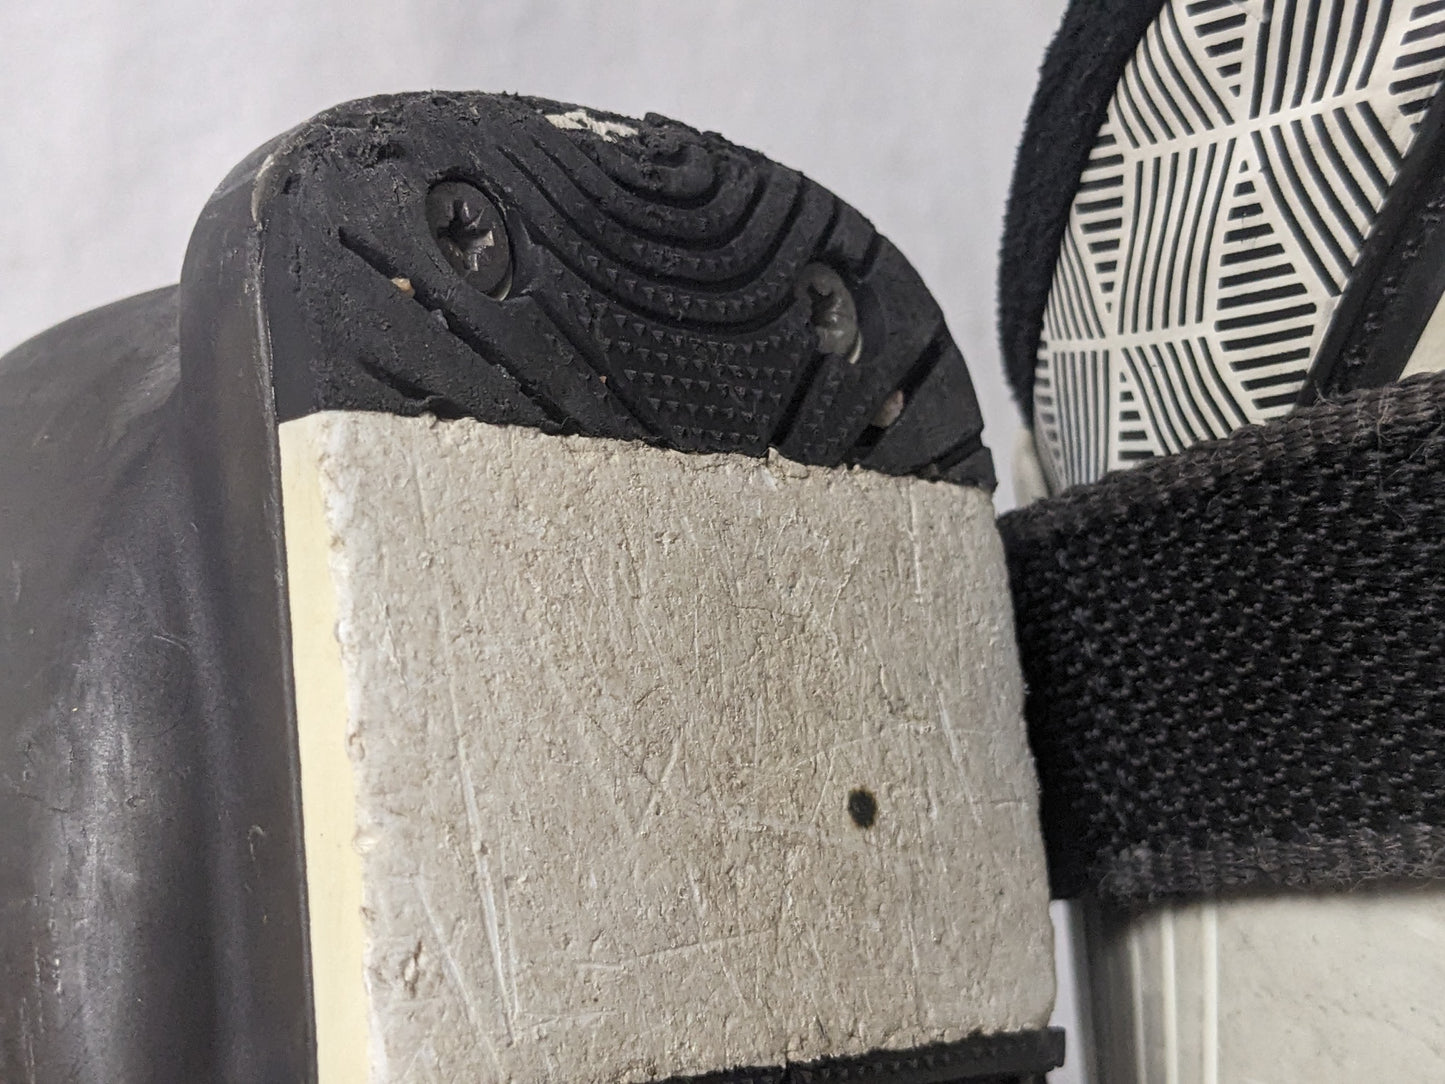 Atomic Waymaker Flex 90 Ski Boots Size 27.5 Color Black Condition Used